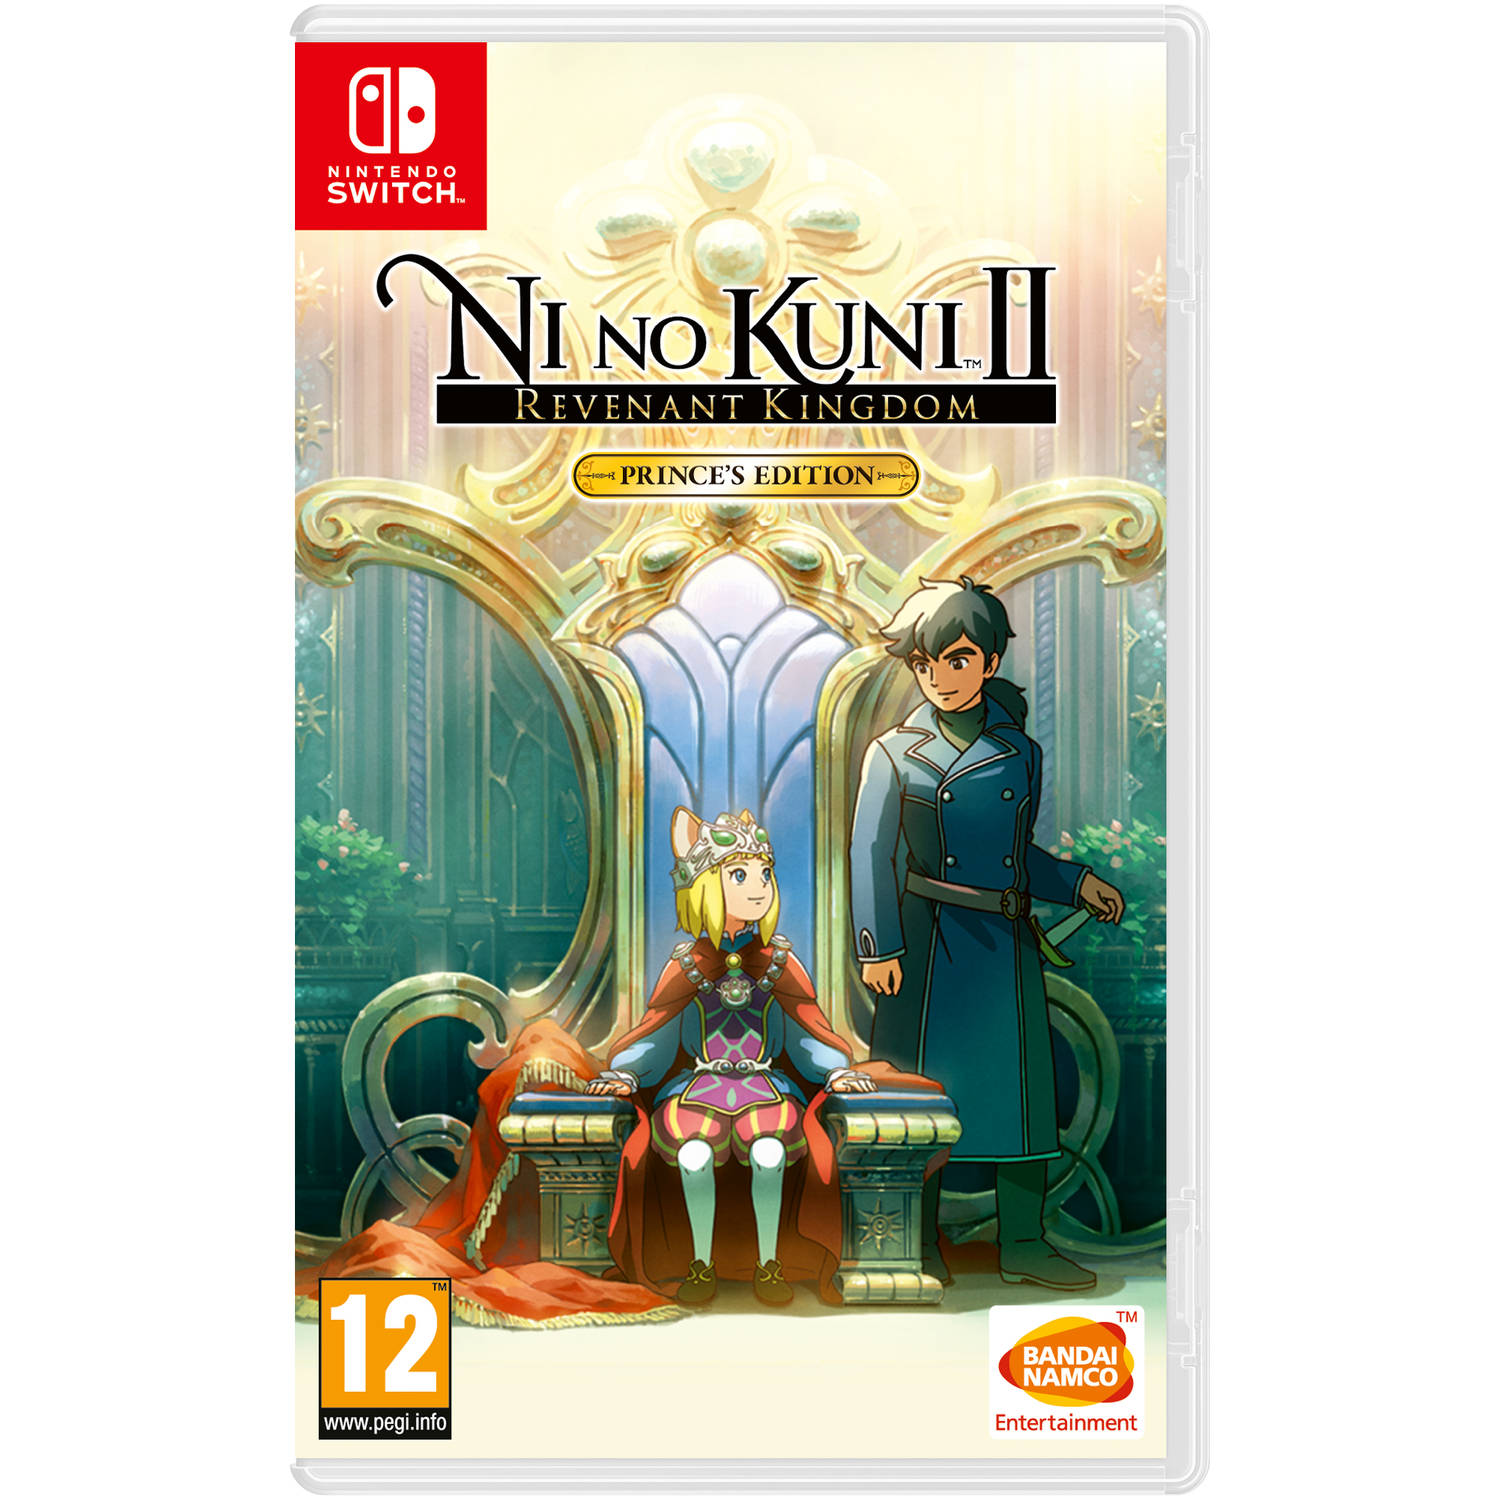 Ni no Kuni II Revenant kingdom (Prince edition), (Nintendo Switch). SWITCH